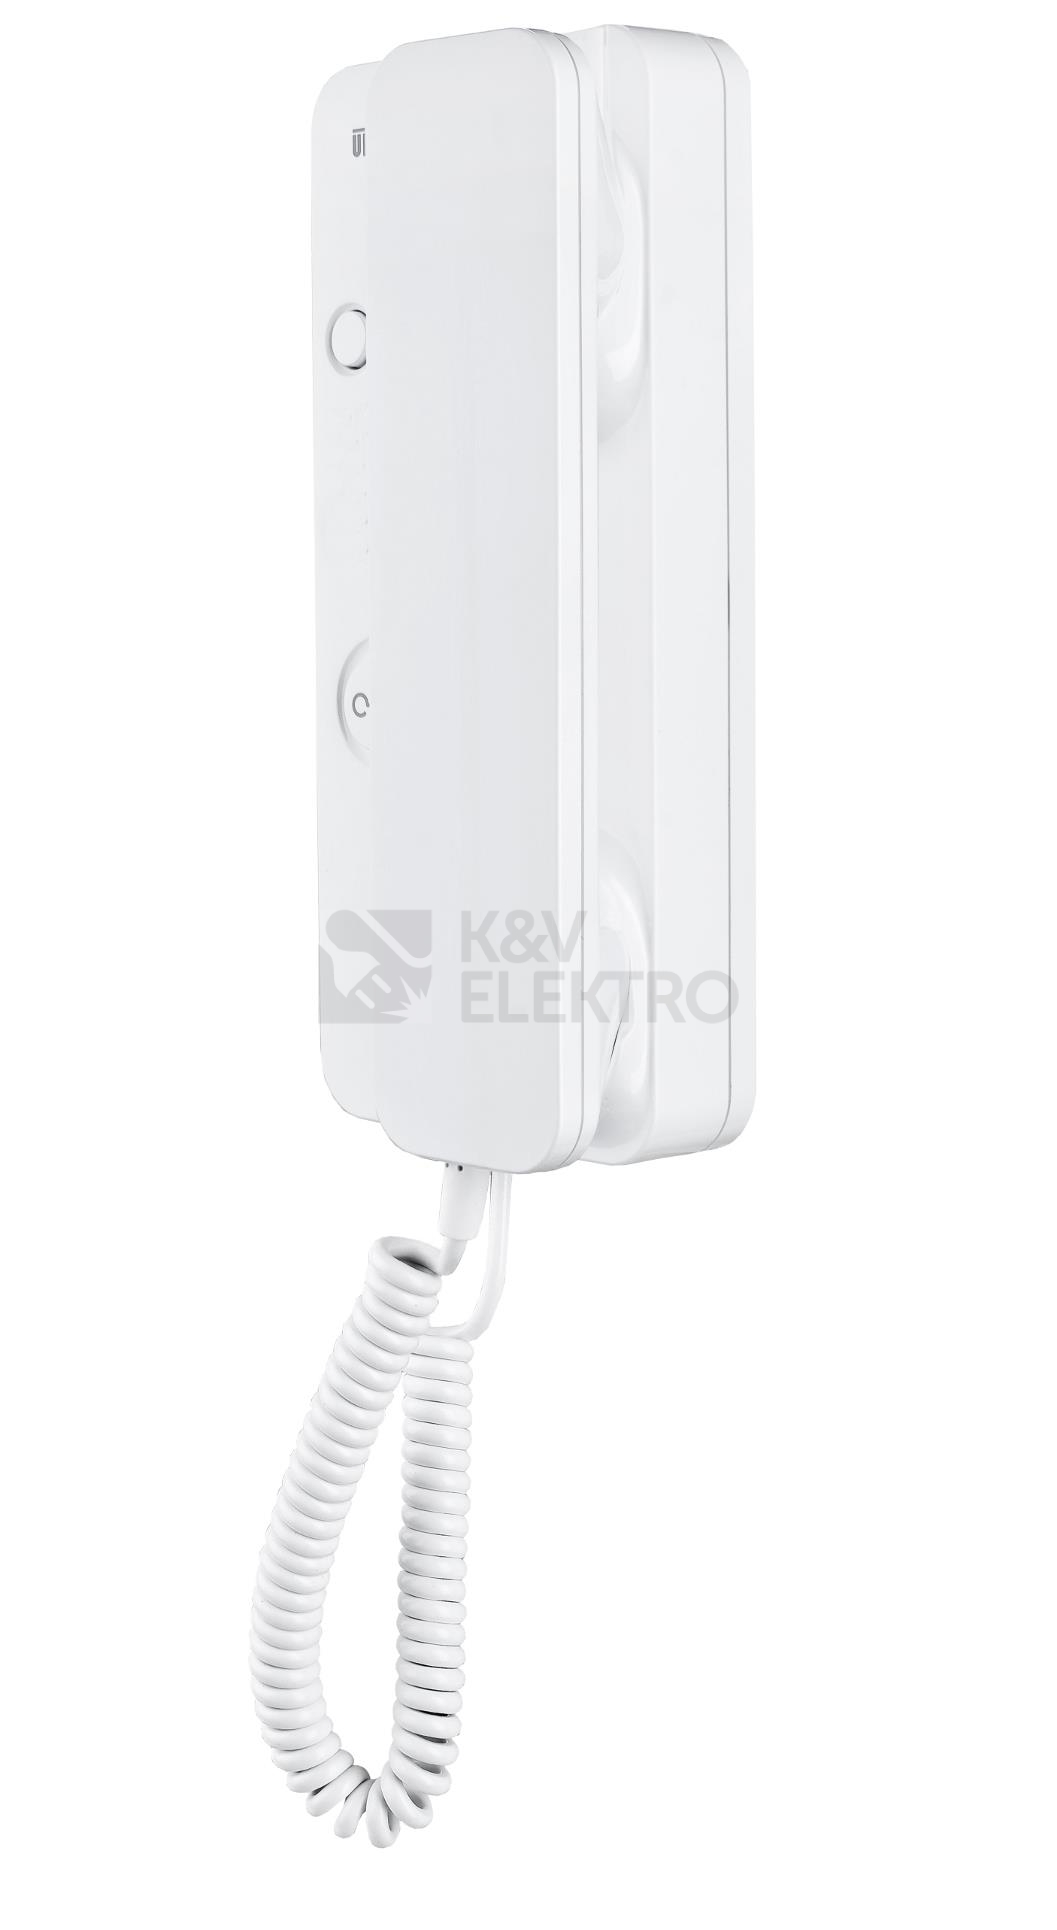 Obrázek produktu Domovní telefon 1+n bílý Urmet 1150/35 0